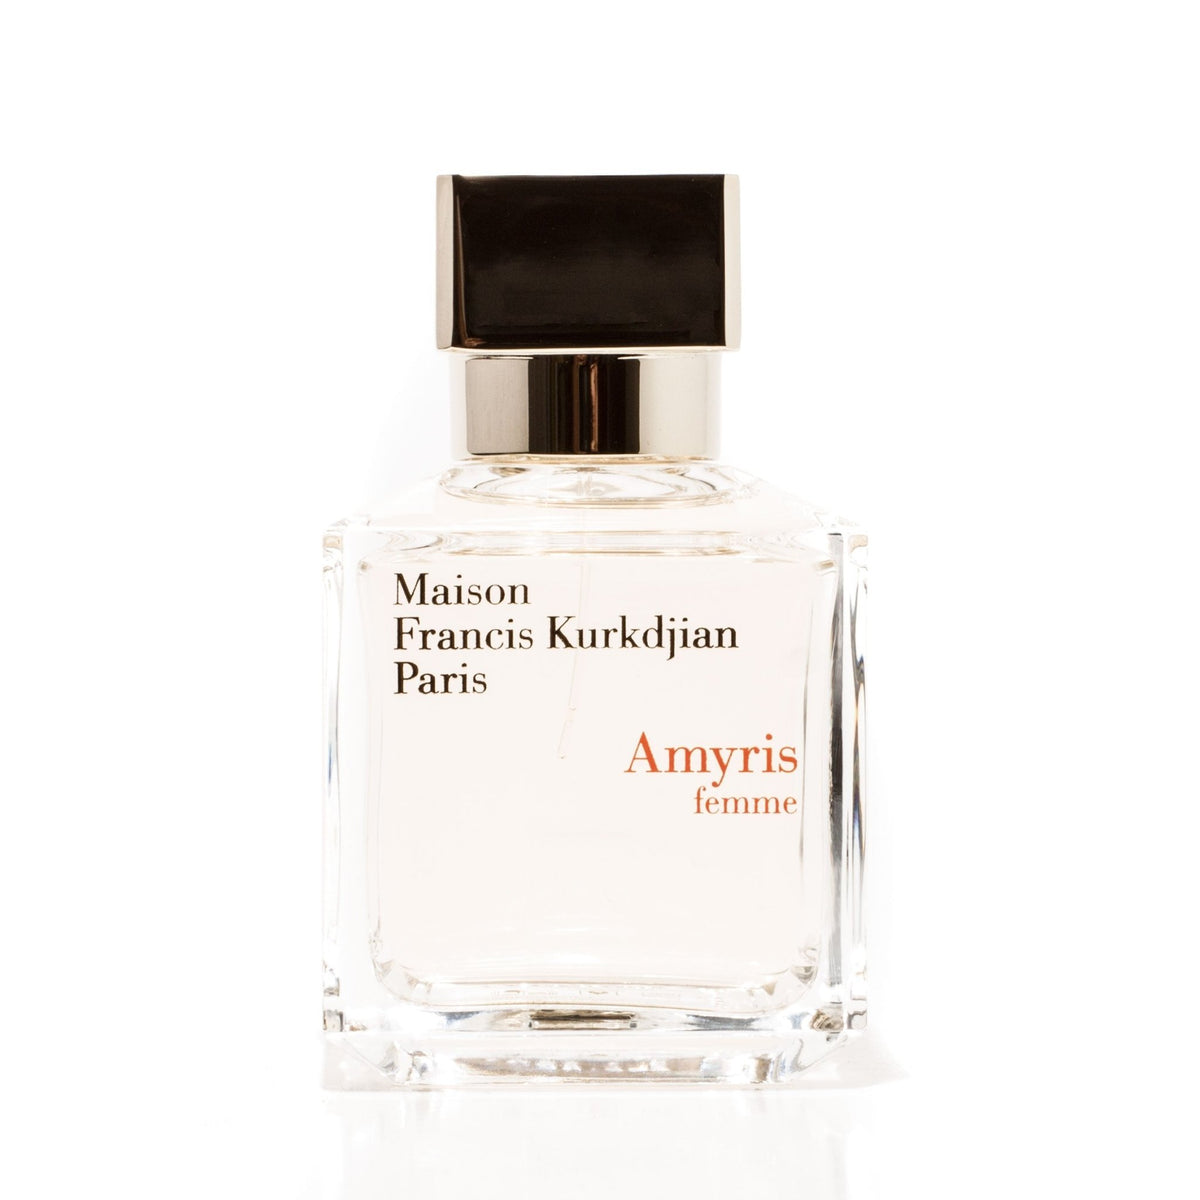 Amyris Femme Eau de Parfum Spray for Women by Maison Francis Kurkdjian 2.4 oz.